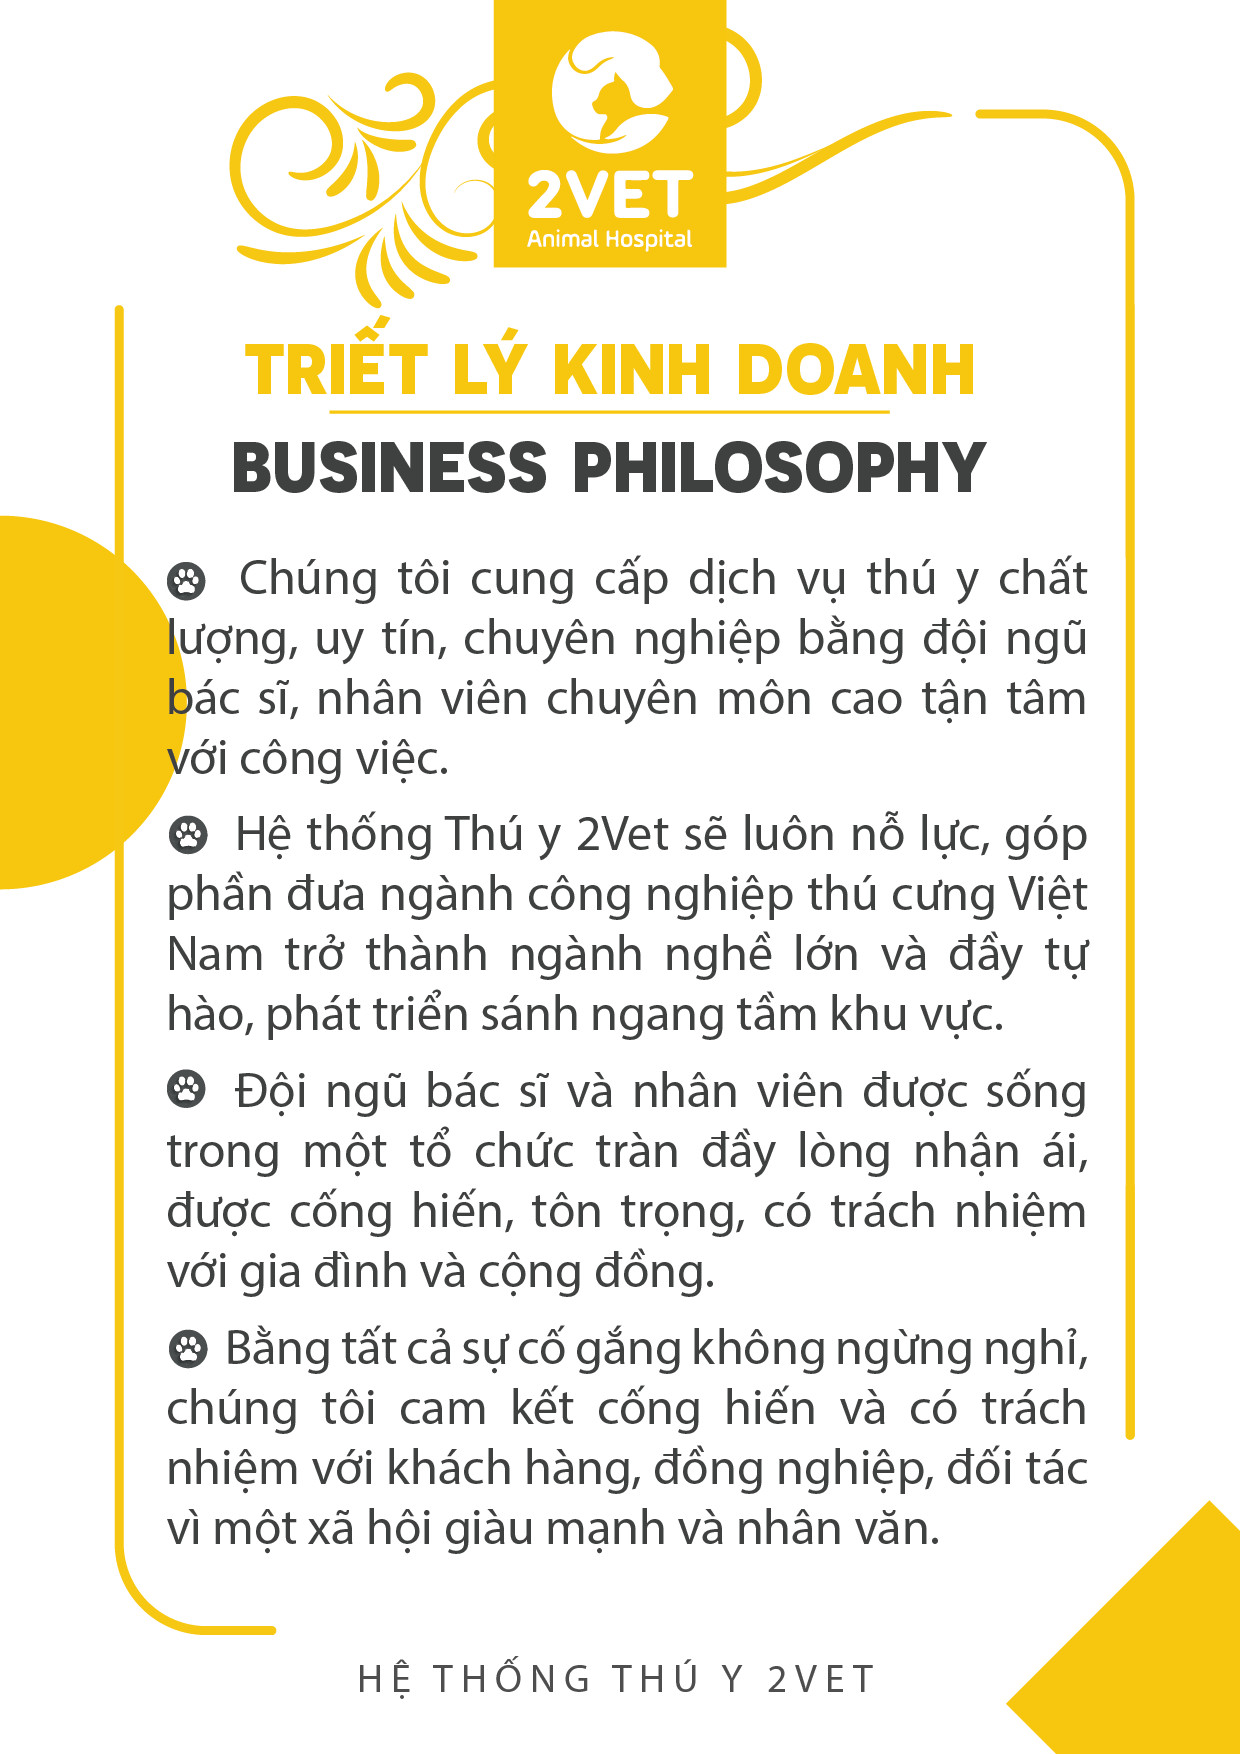 triết lý kinh doanh 2Vet